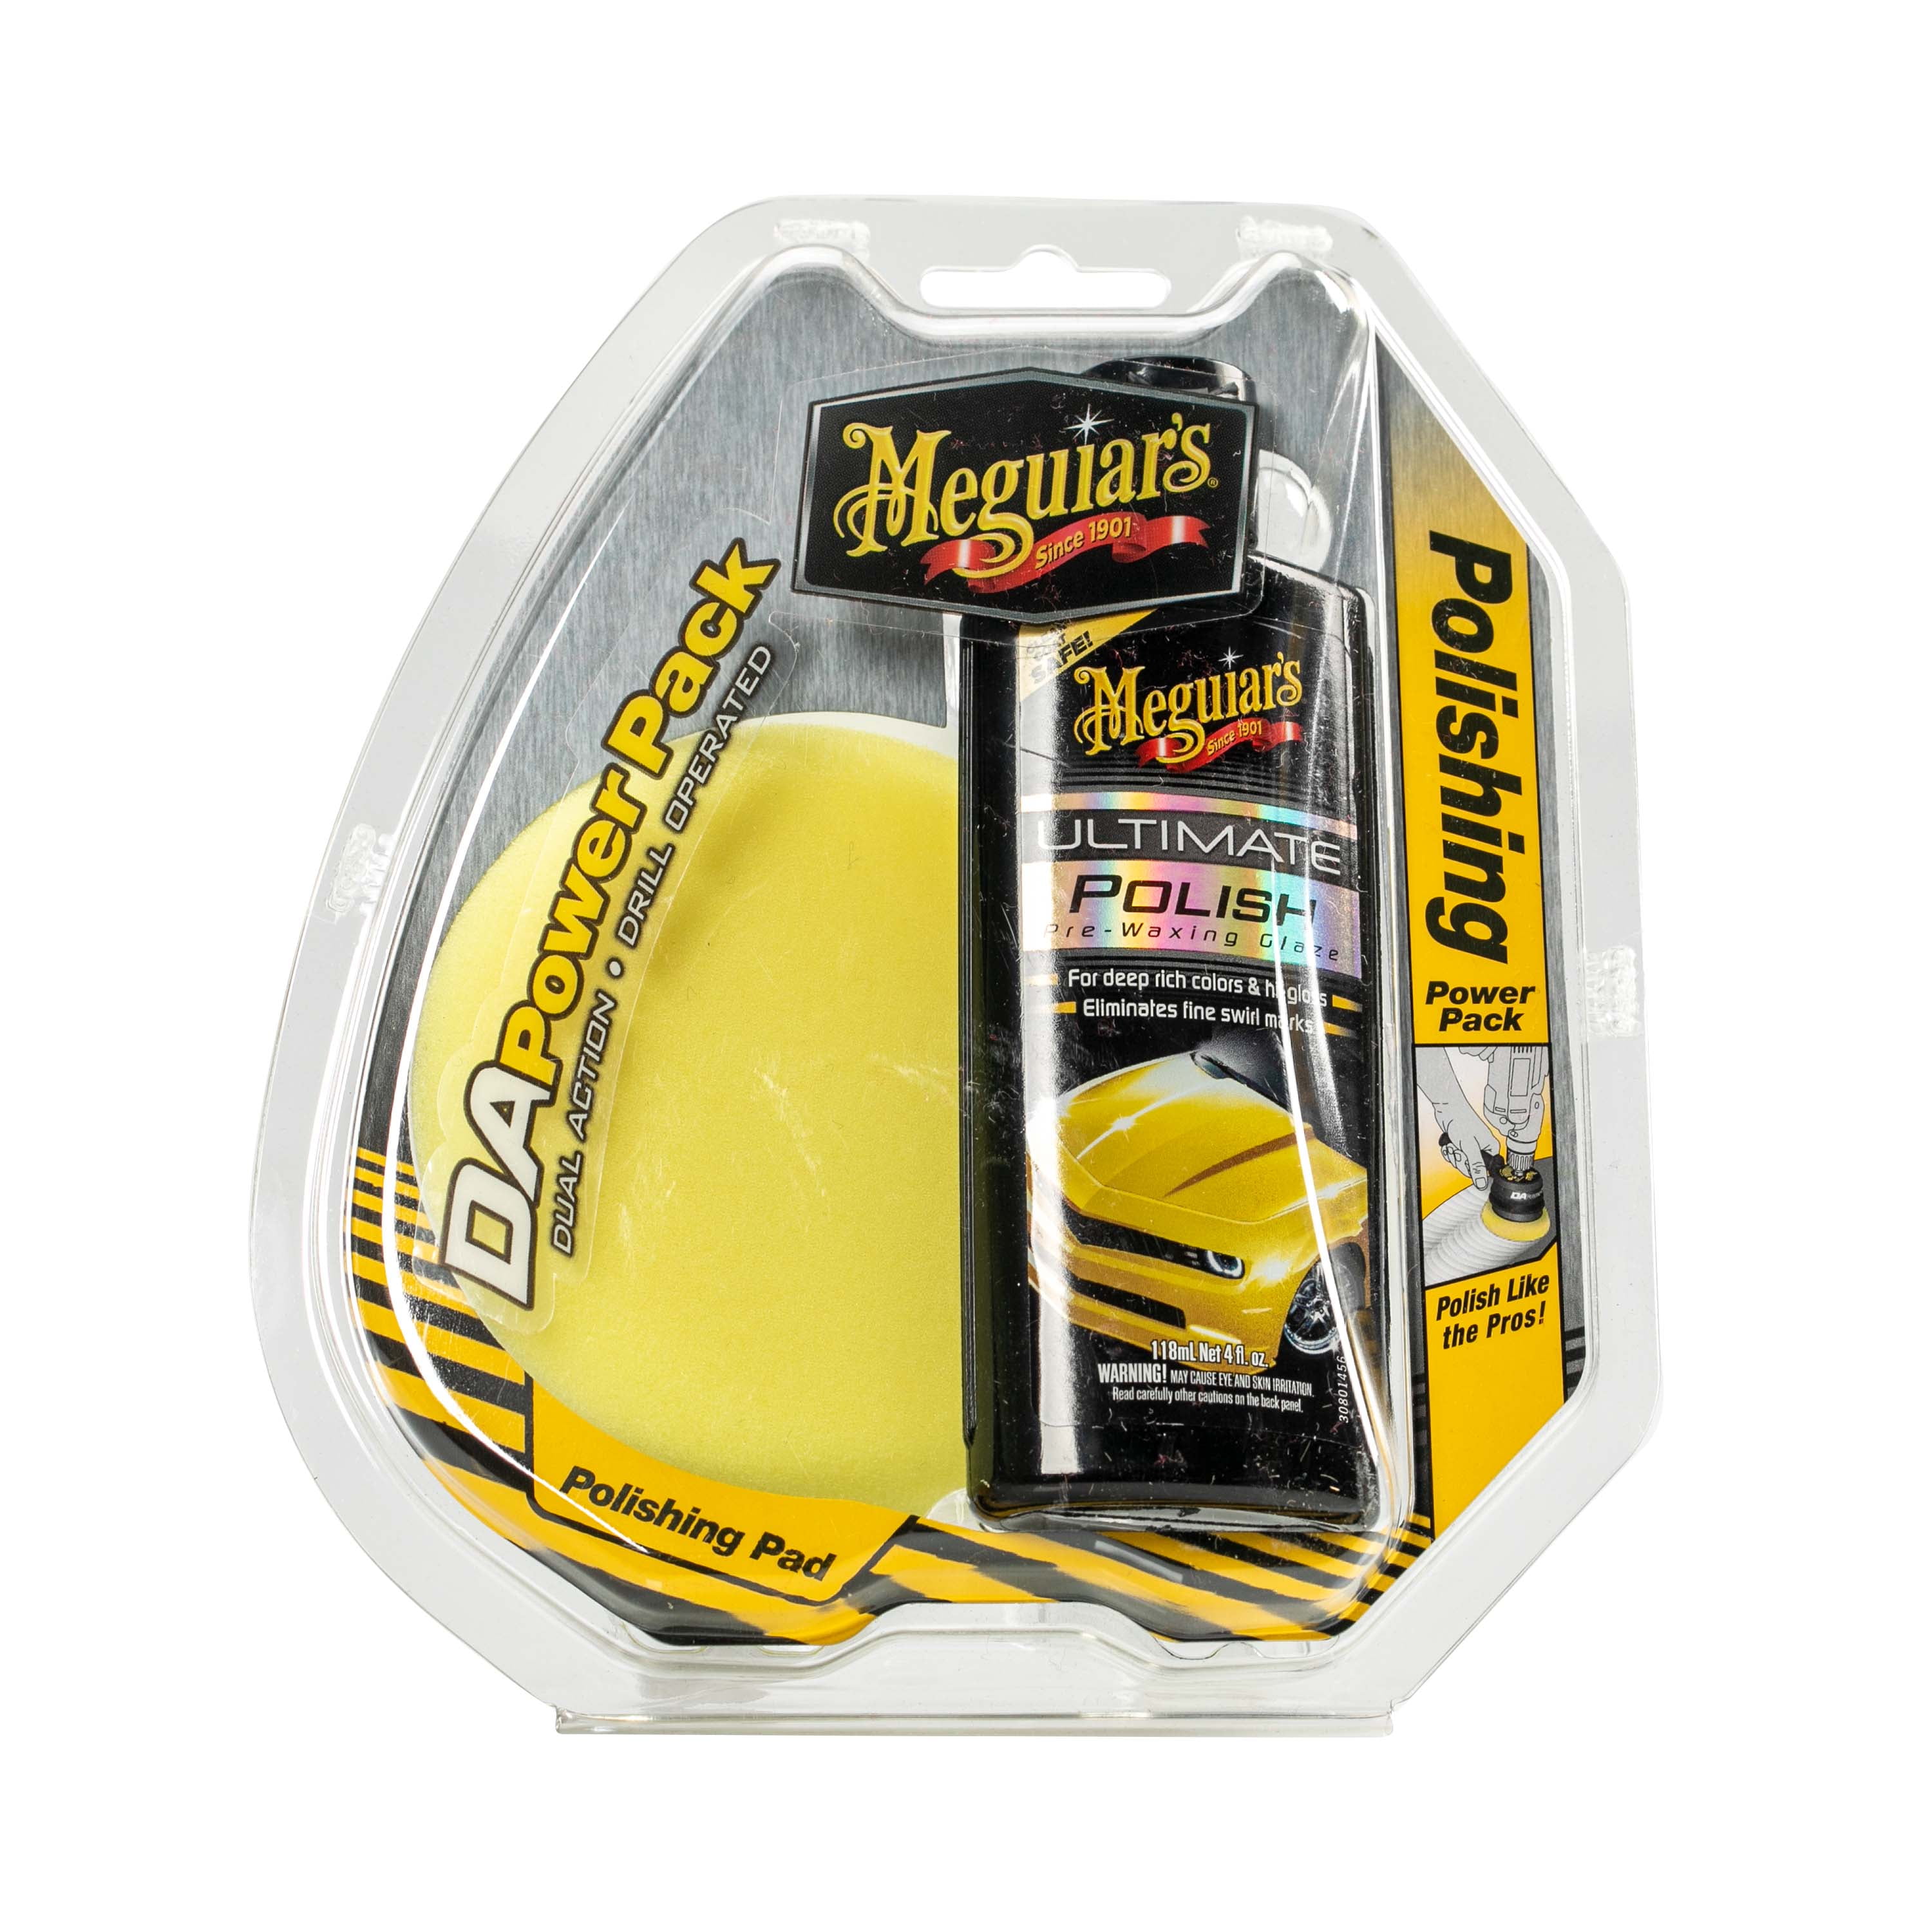 Walmart] Meguiars ultimate polish - 5$ (YMMV) - RedFlagDeals.com Forums